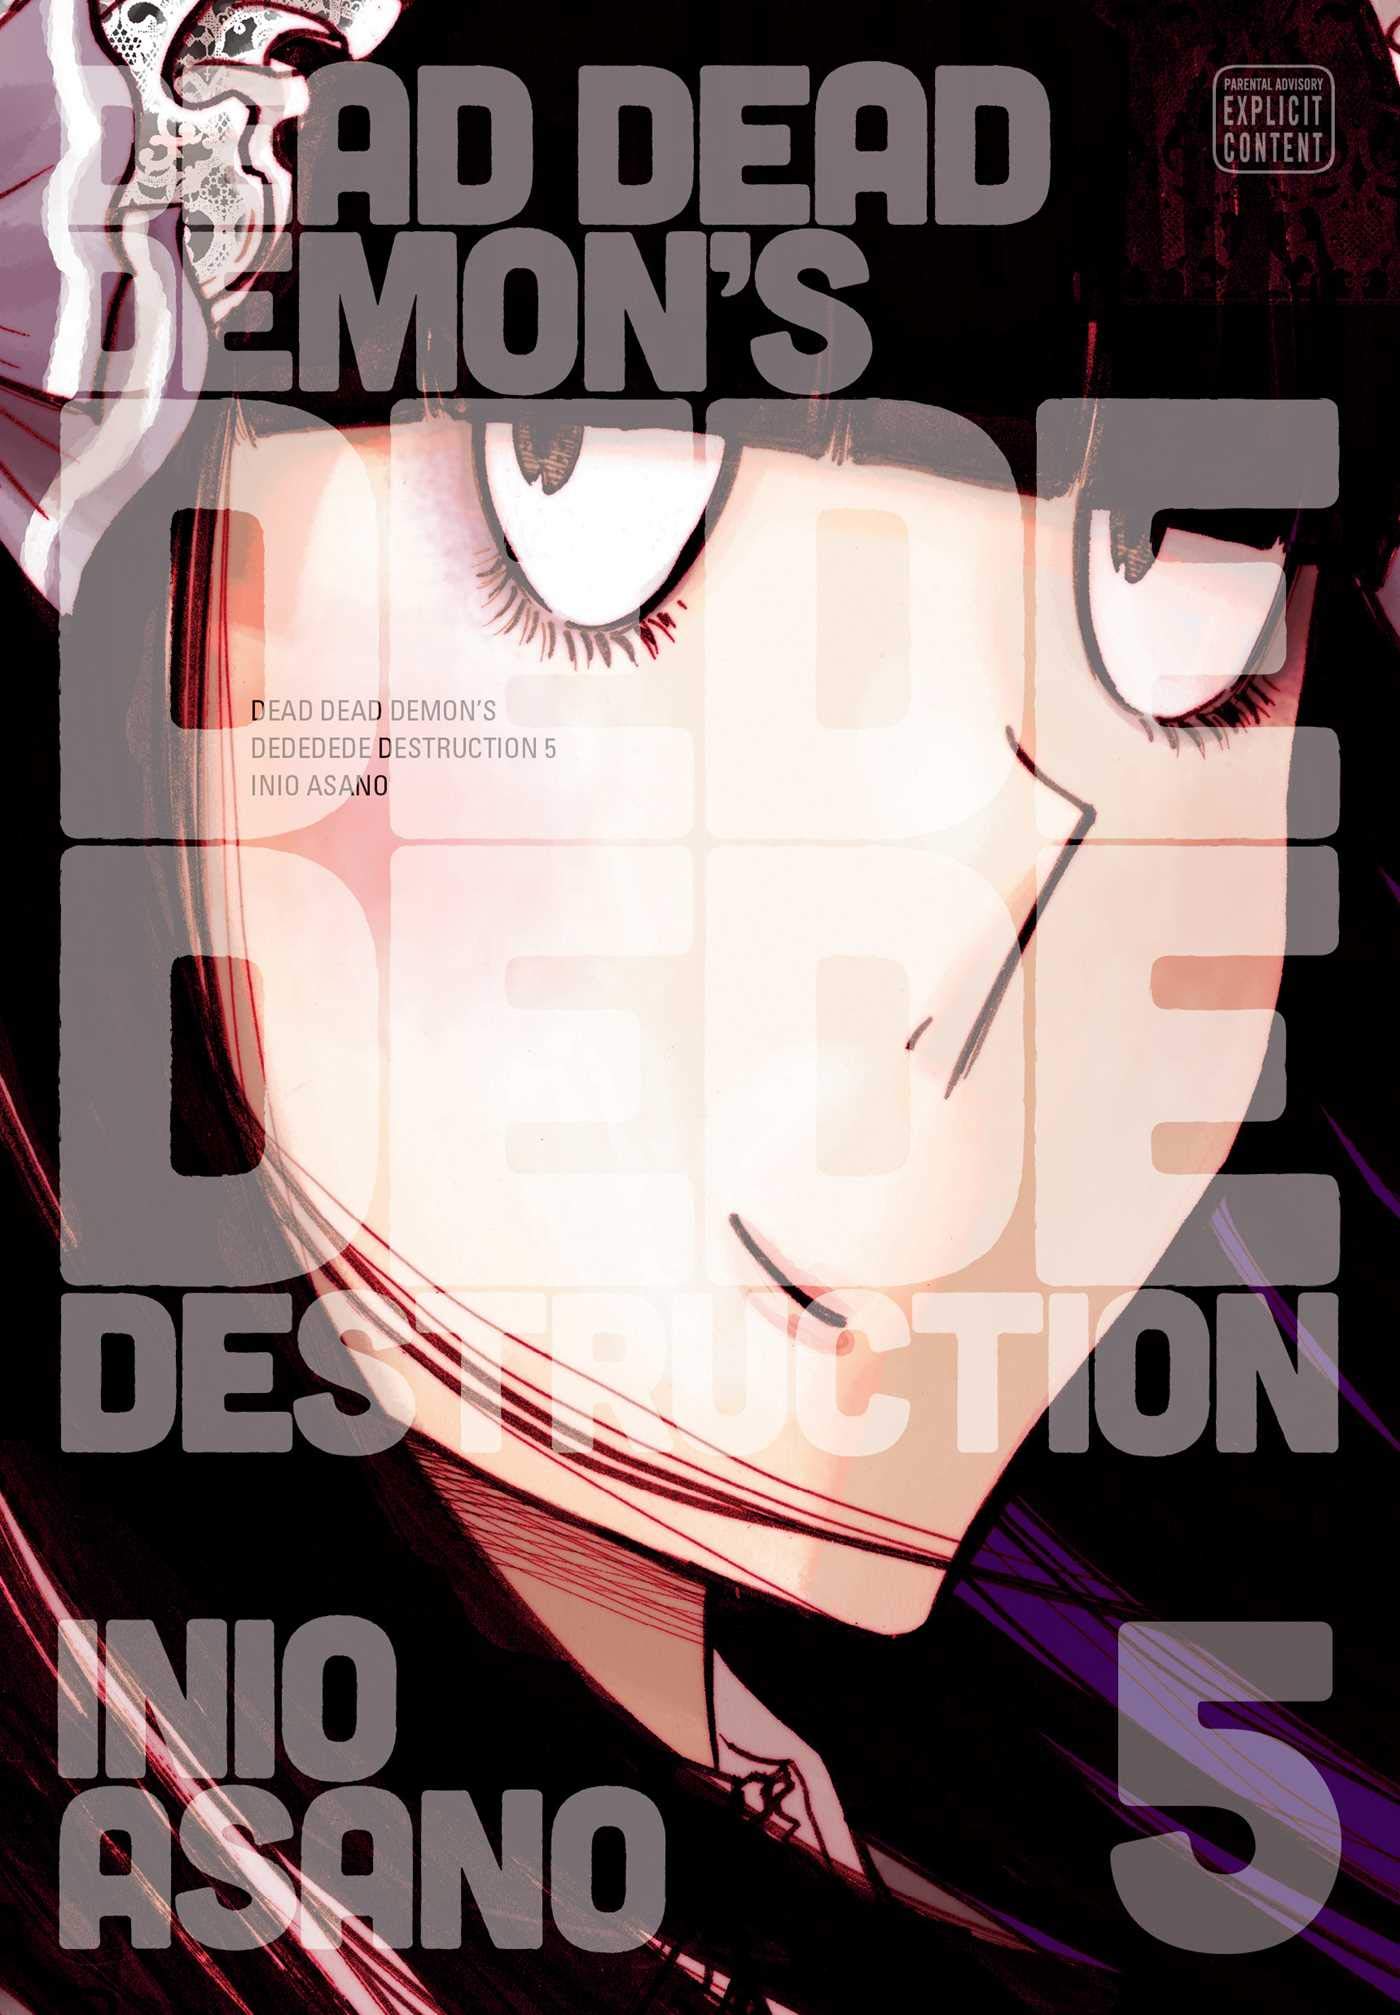 Dead Dead Demon's Dededede Destruction vol 5